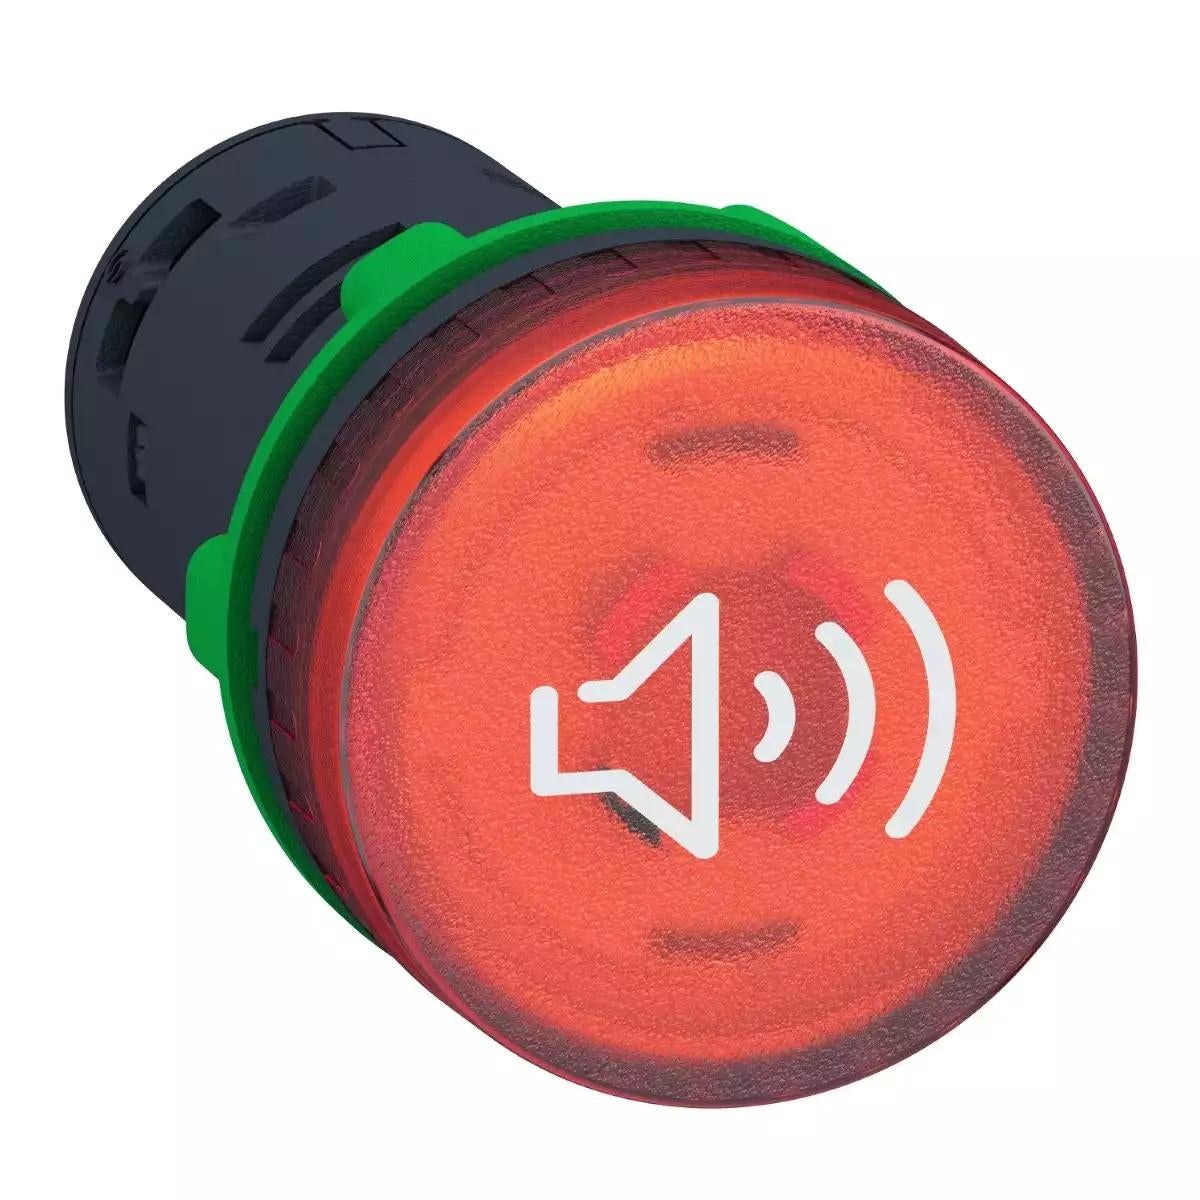 Schneider Electric Harmony XB5 Illuminated buzzer, plastic, red, Ã˜22, continuous or intermittent tone, 24 V AC/DC